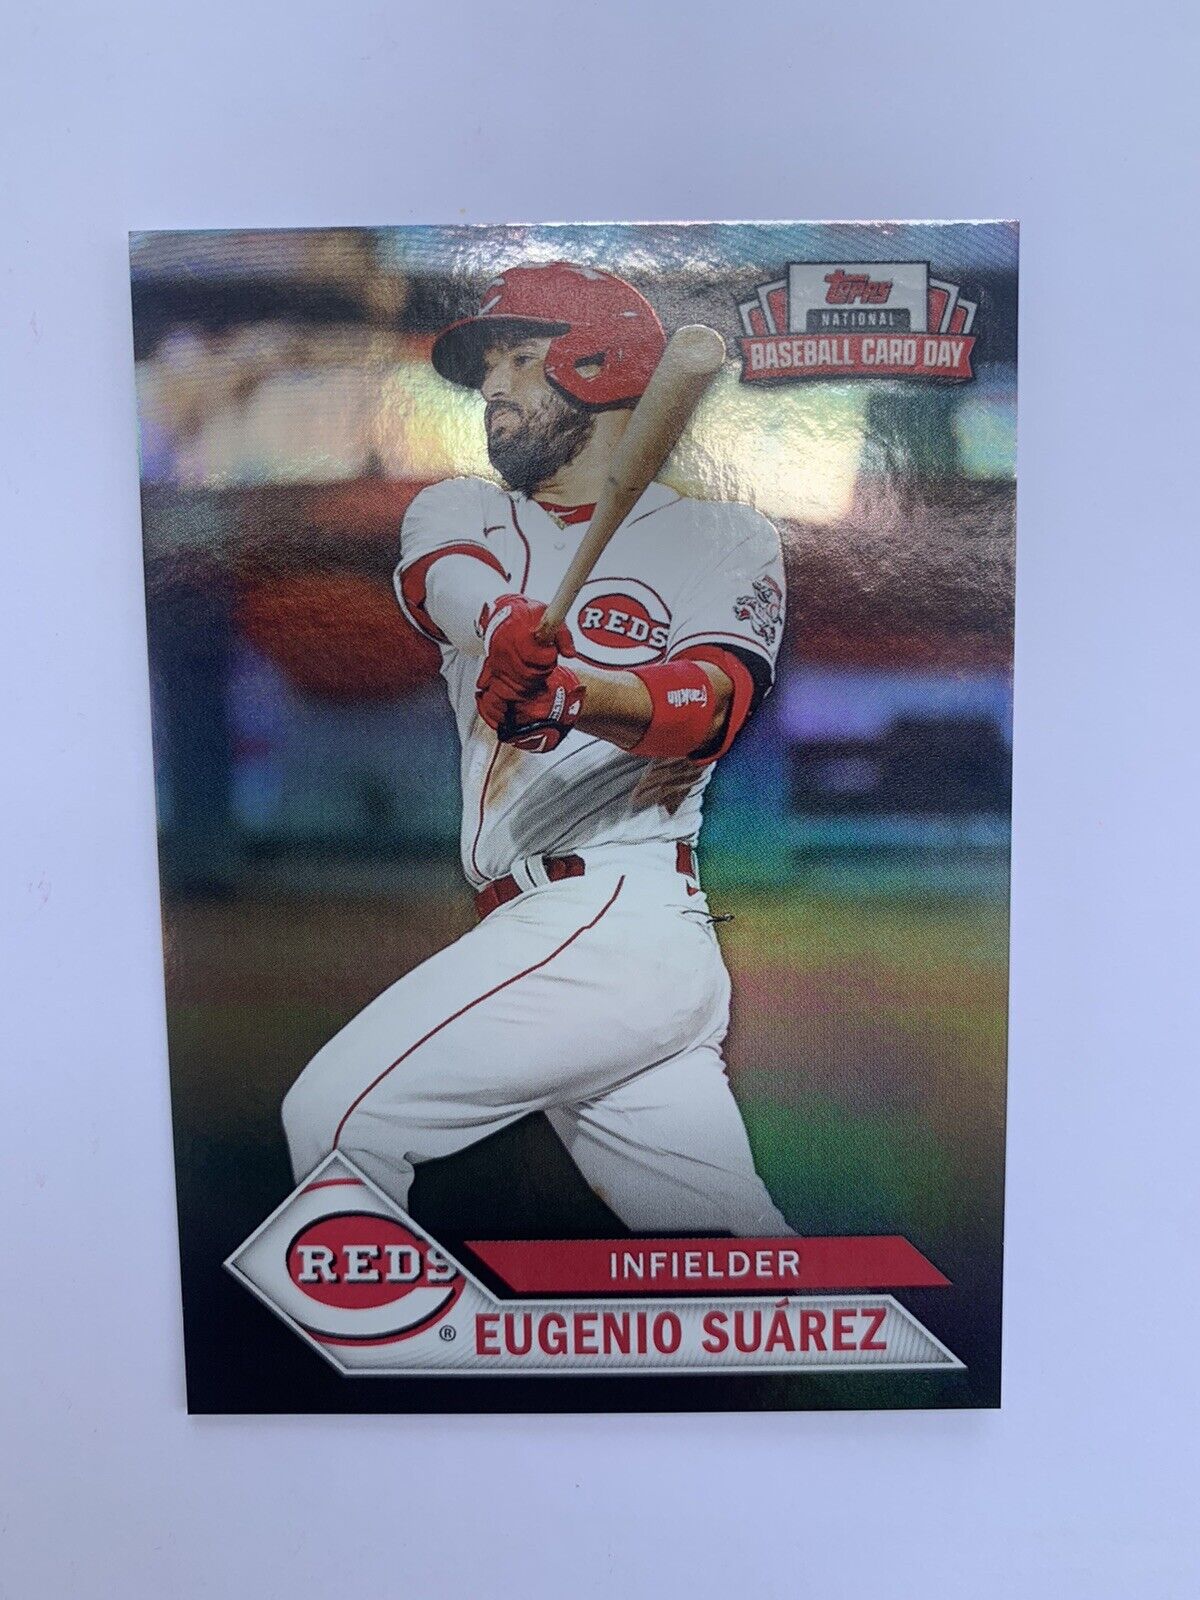 2021 National Baseball Trading Card Day Cincinnati Reds Issued Eugenio Suarez